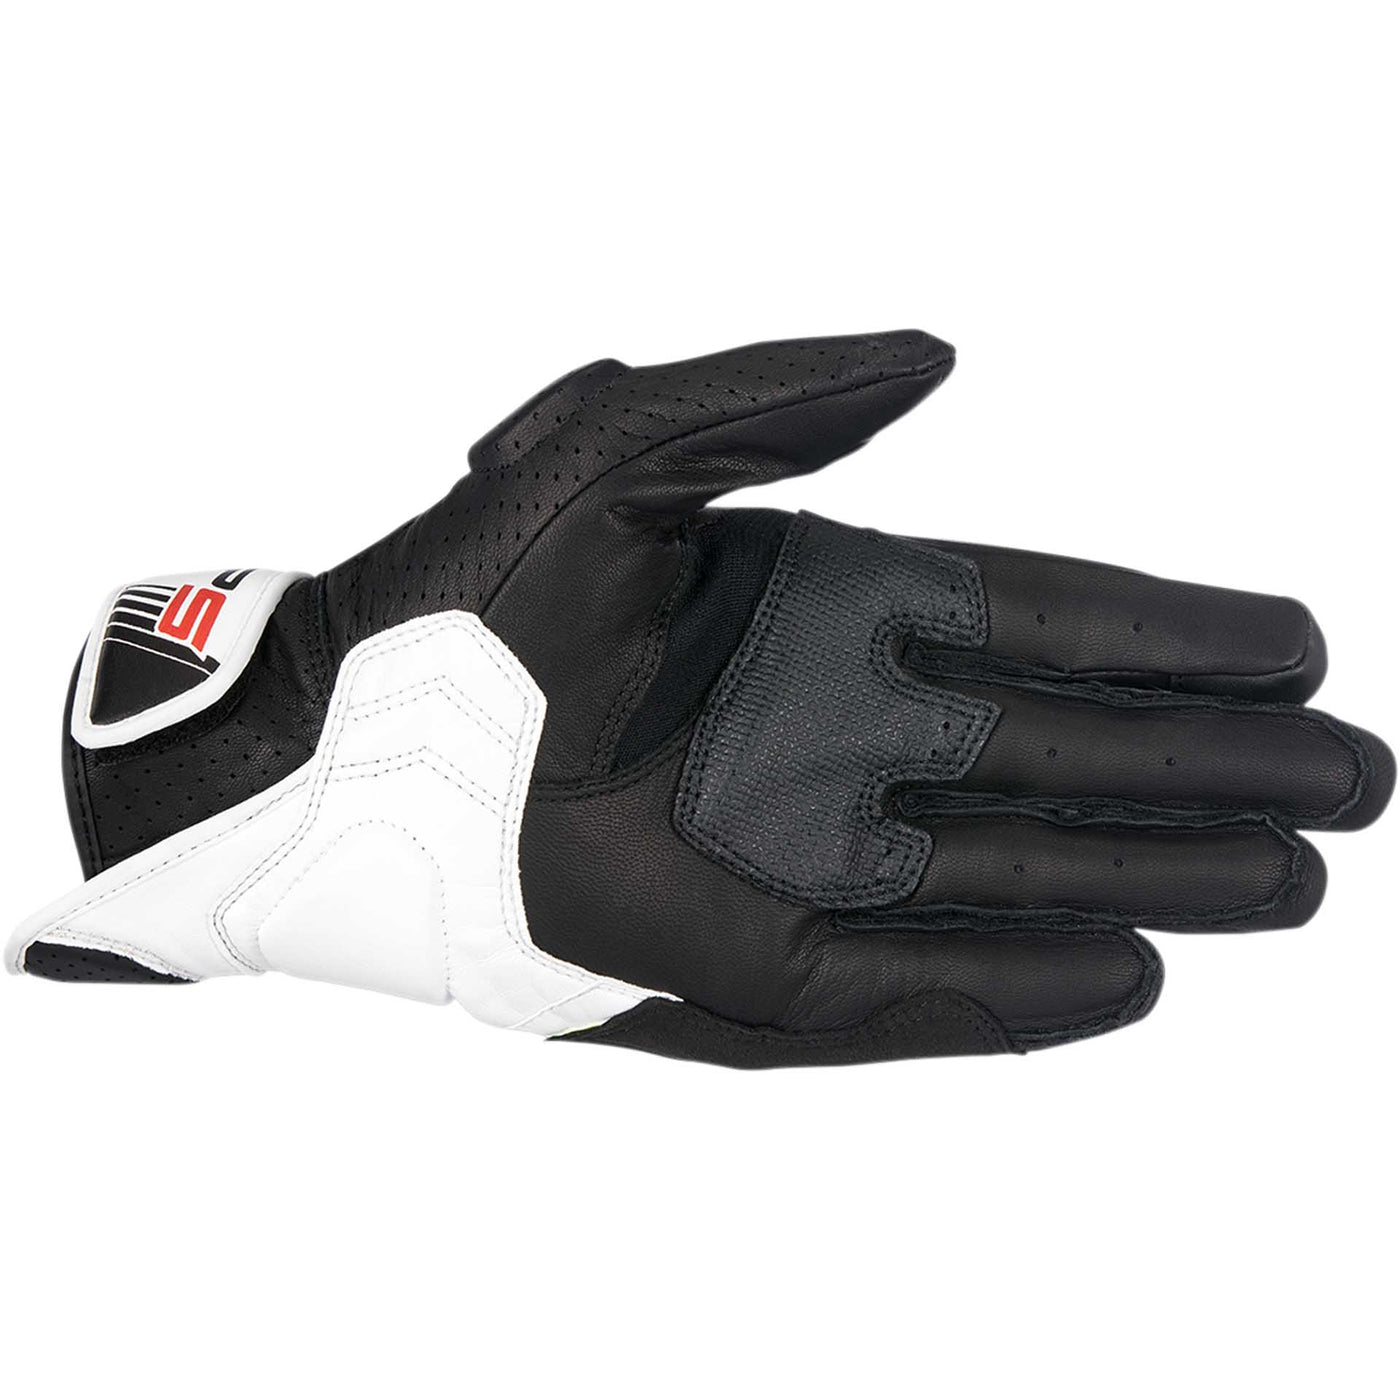 Alpinestars SP-5 Gloves